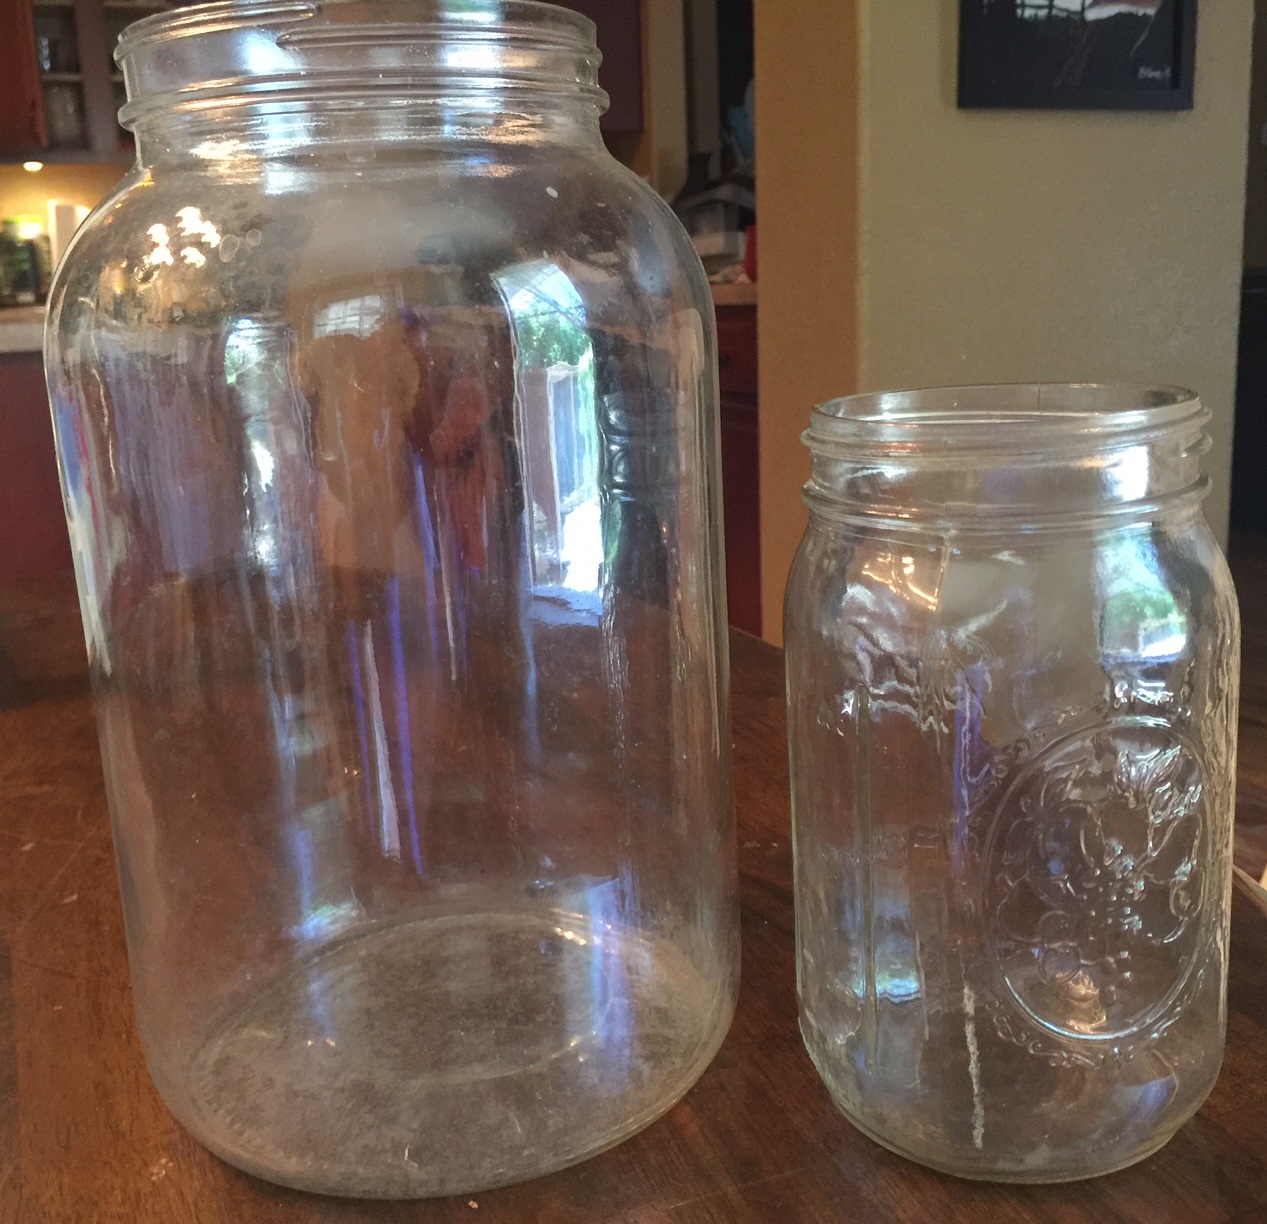 DIY Mother's Day gift jar tutorial: No craft skills necessary